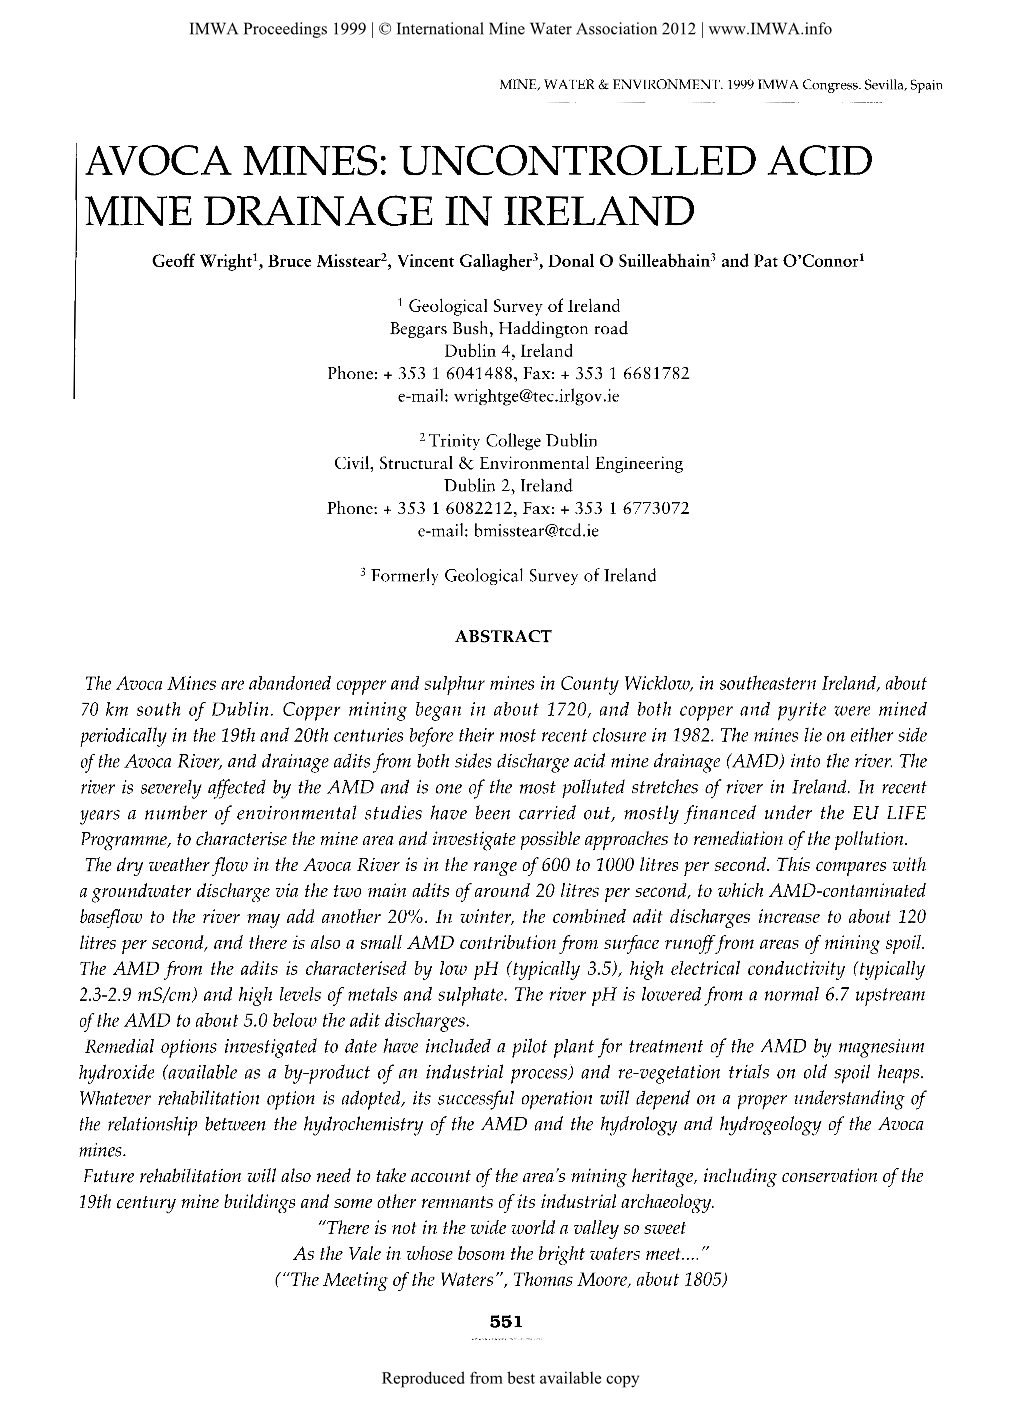 Avoca Mines: Uncontrolled Acid Mine Drainage in Ireland